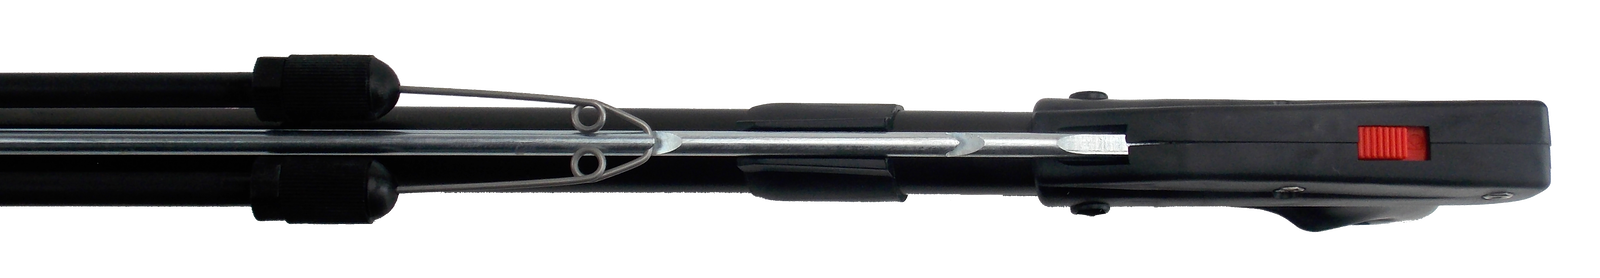 Spearfishing Hogzilla Ambush 90 lightweight euro-style band Spear gun 48.5" long